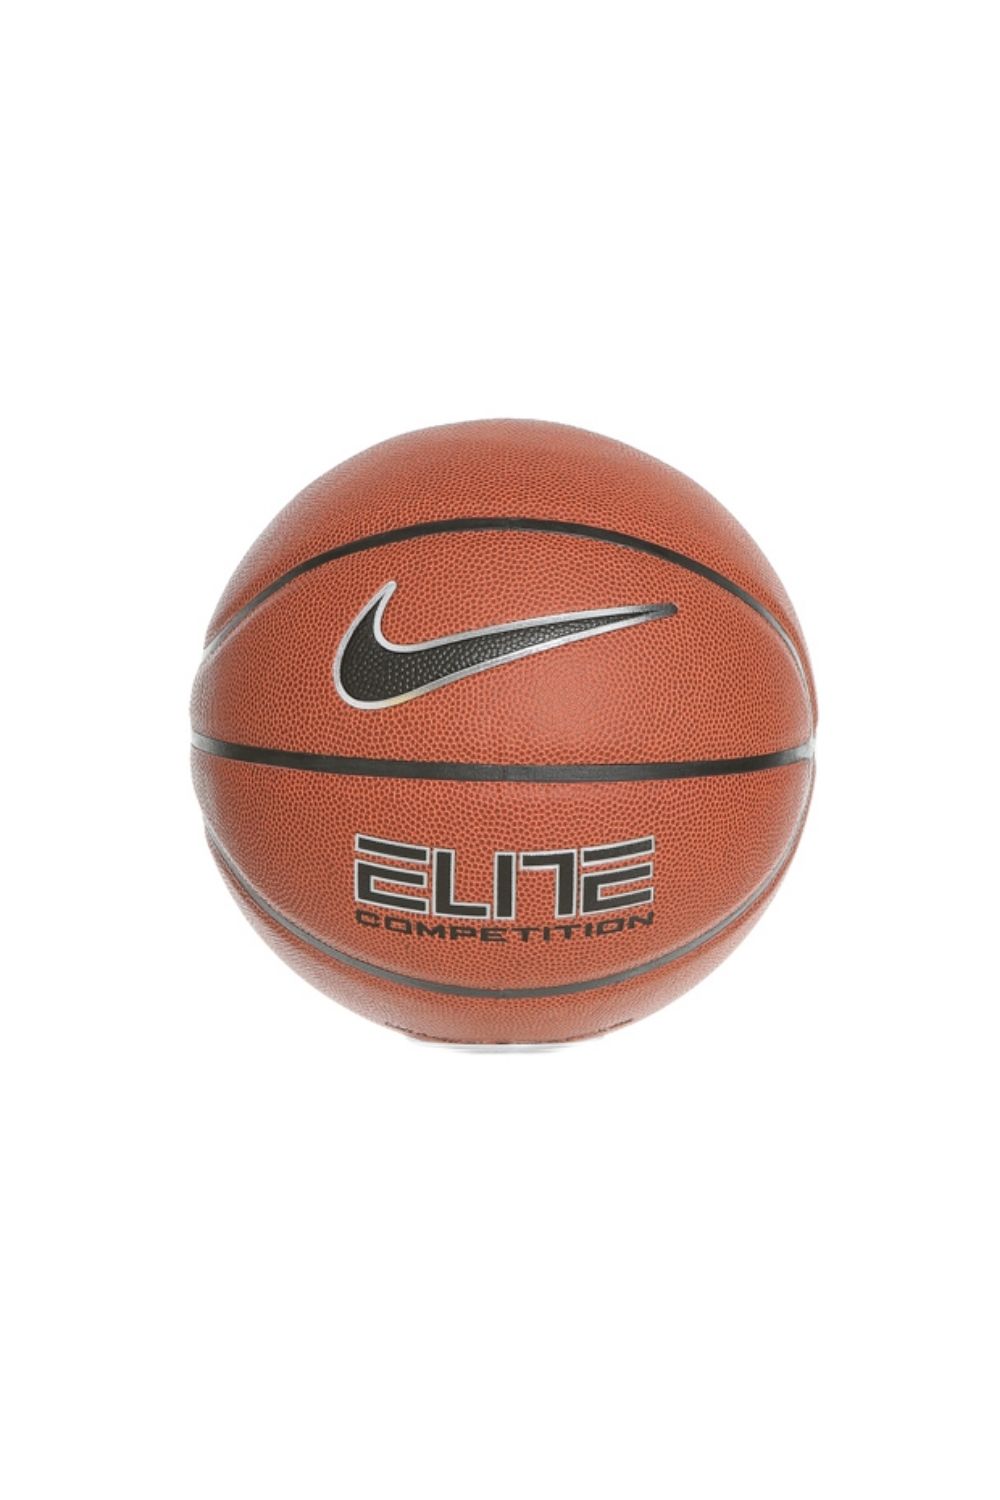 NIKE – Μπαλα basketball NIKE ELITE COMPETITION 8P πορτοκαλι